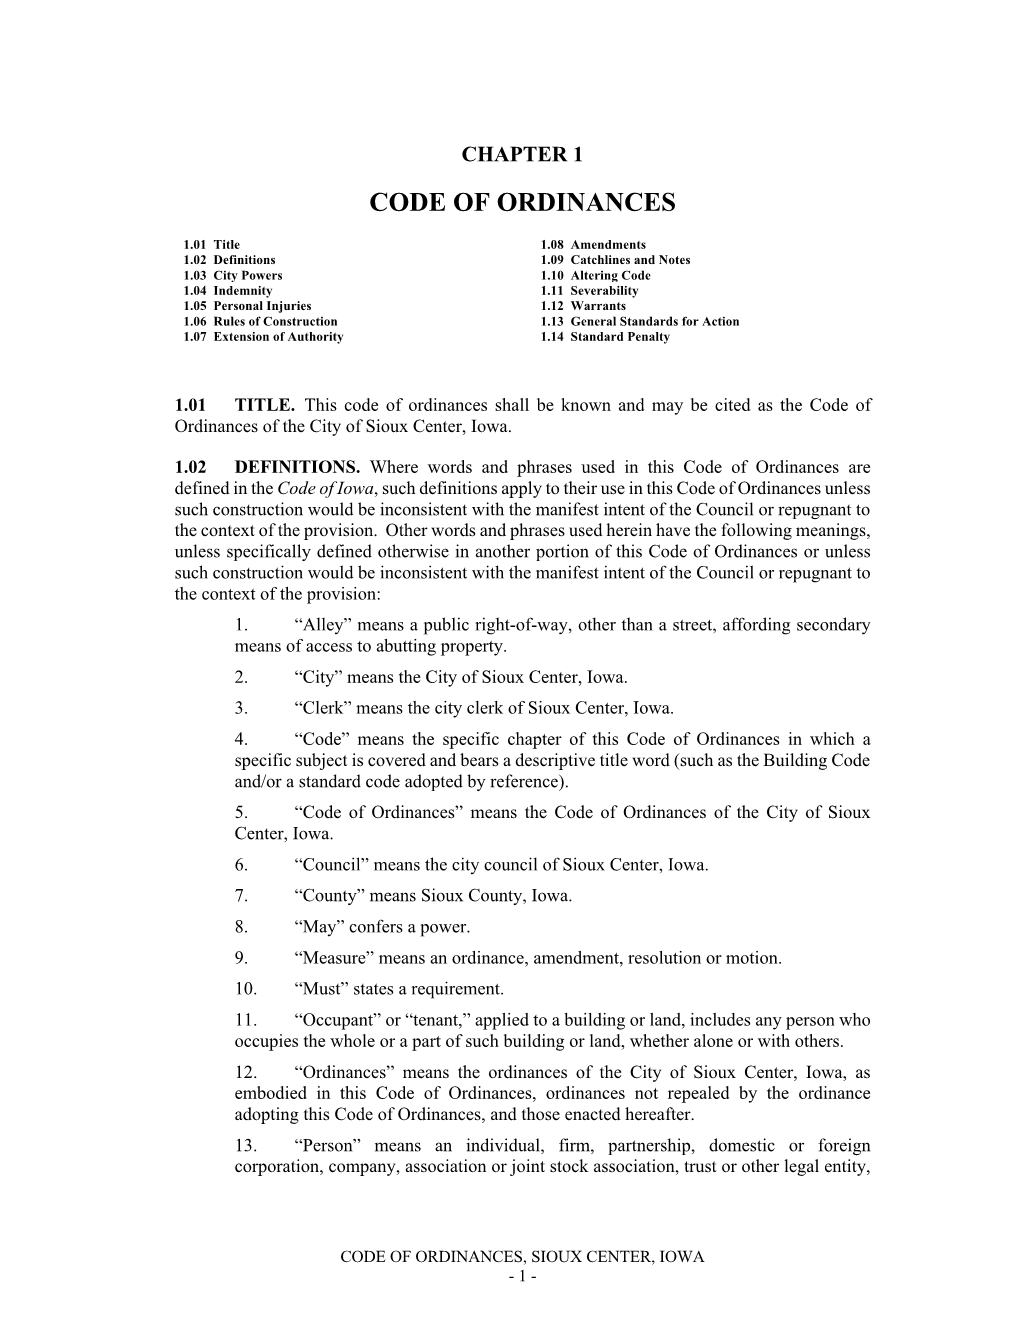 Code of Ordinances (PDF)